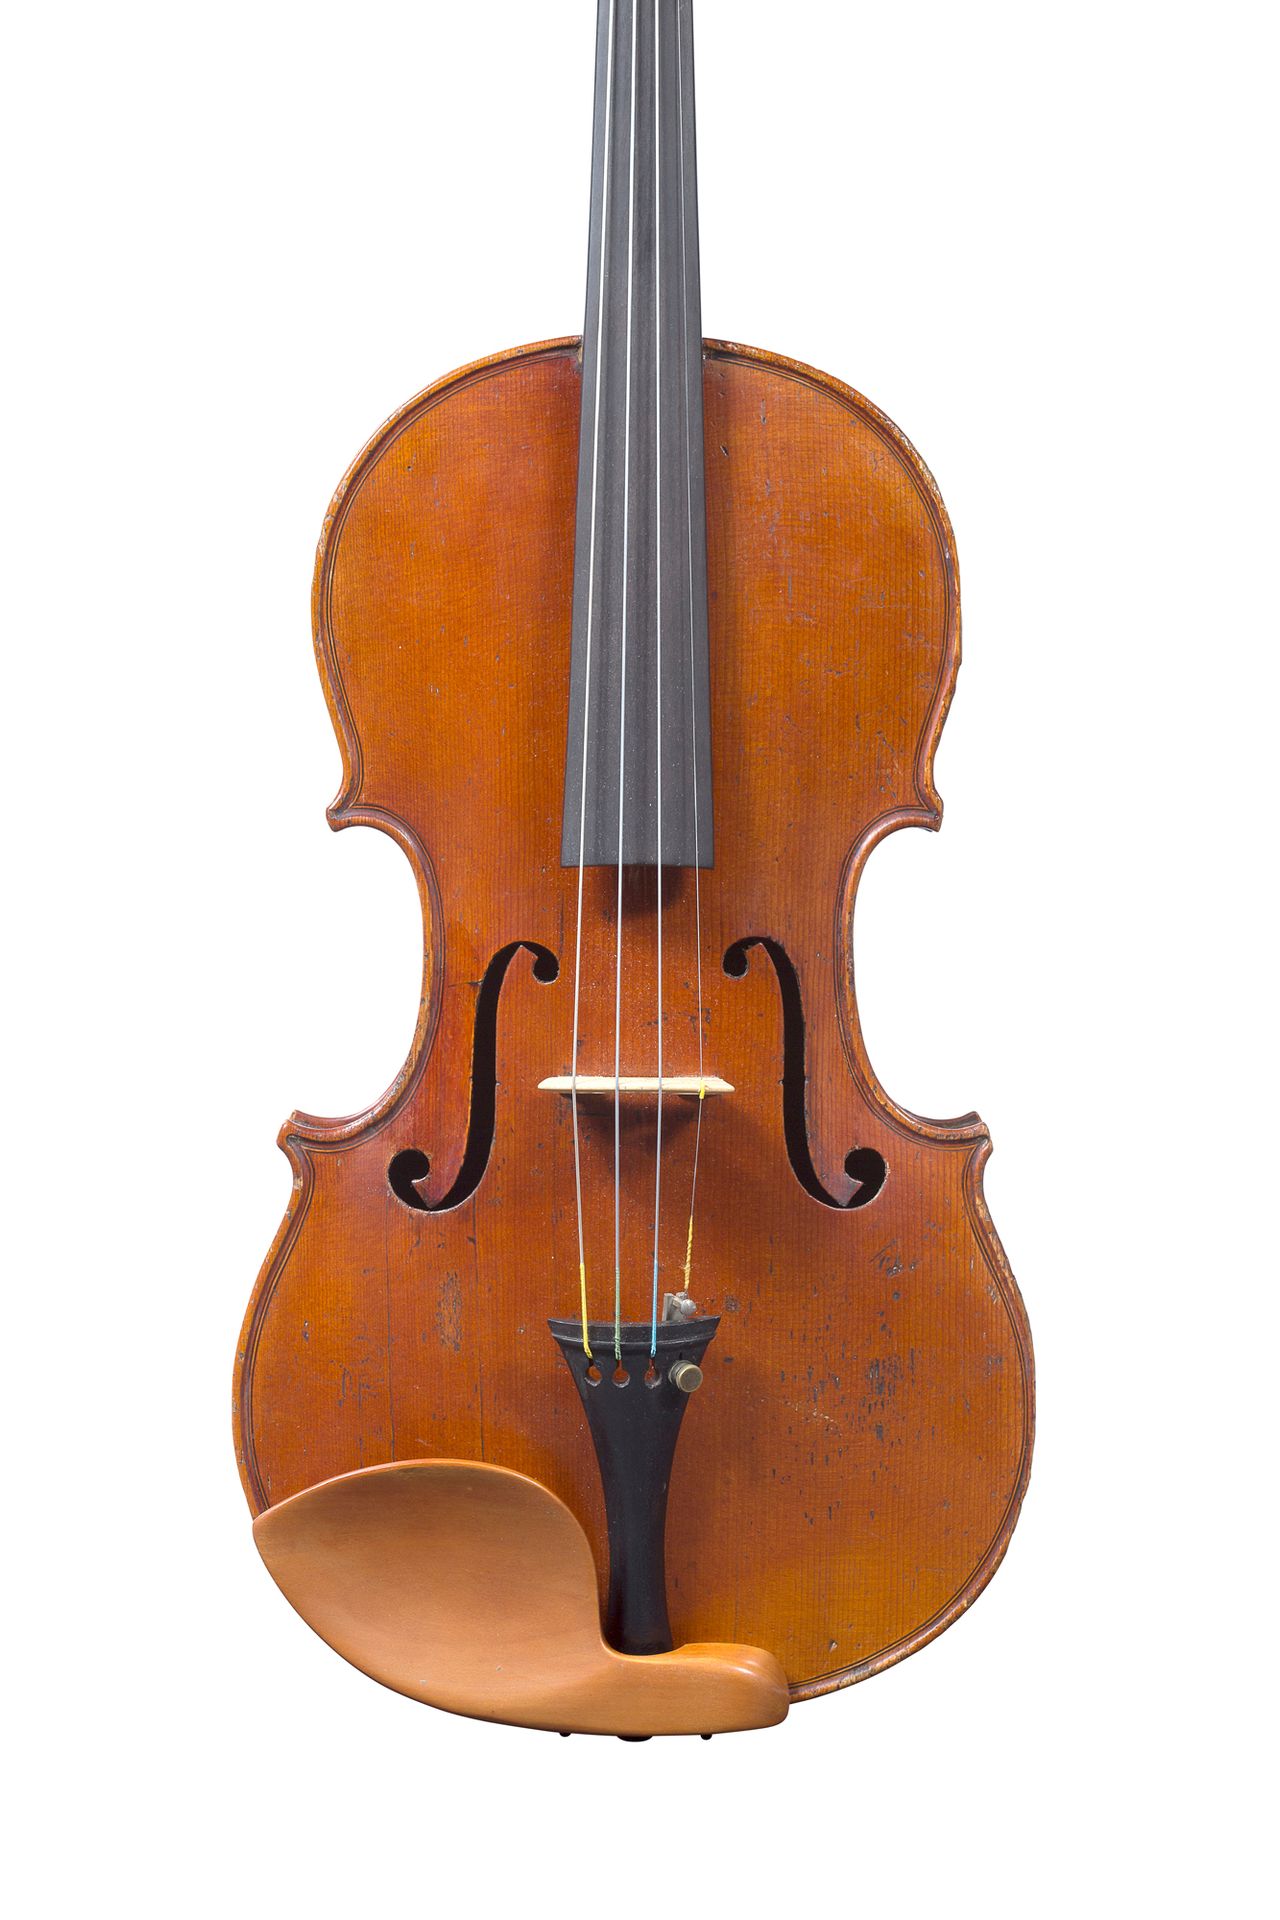 Null A French Violin by Dominique Didelot, Mirecourt circa 1830-40